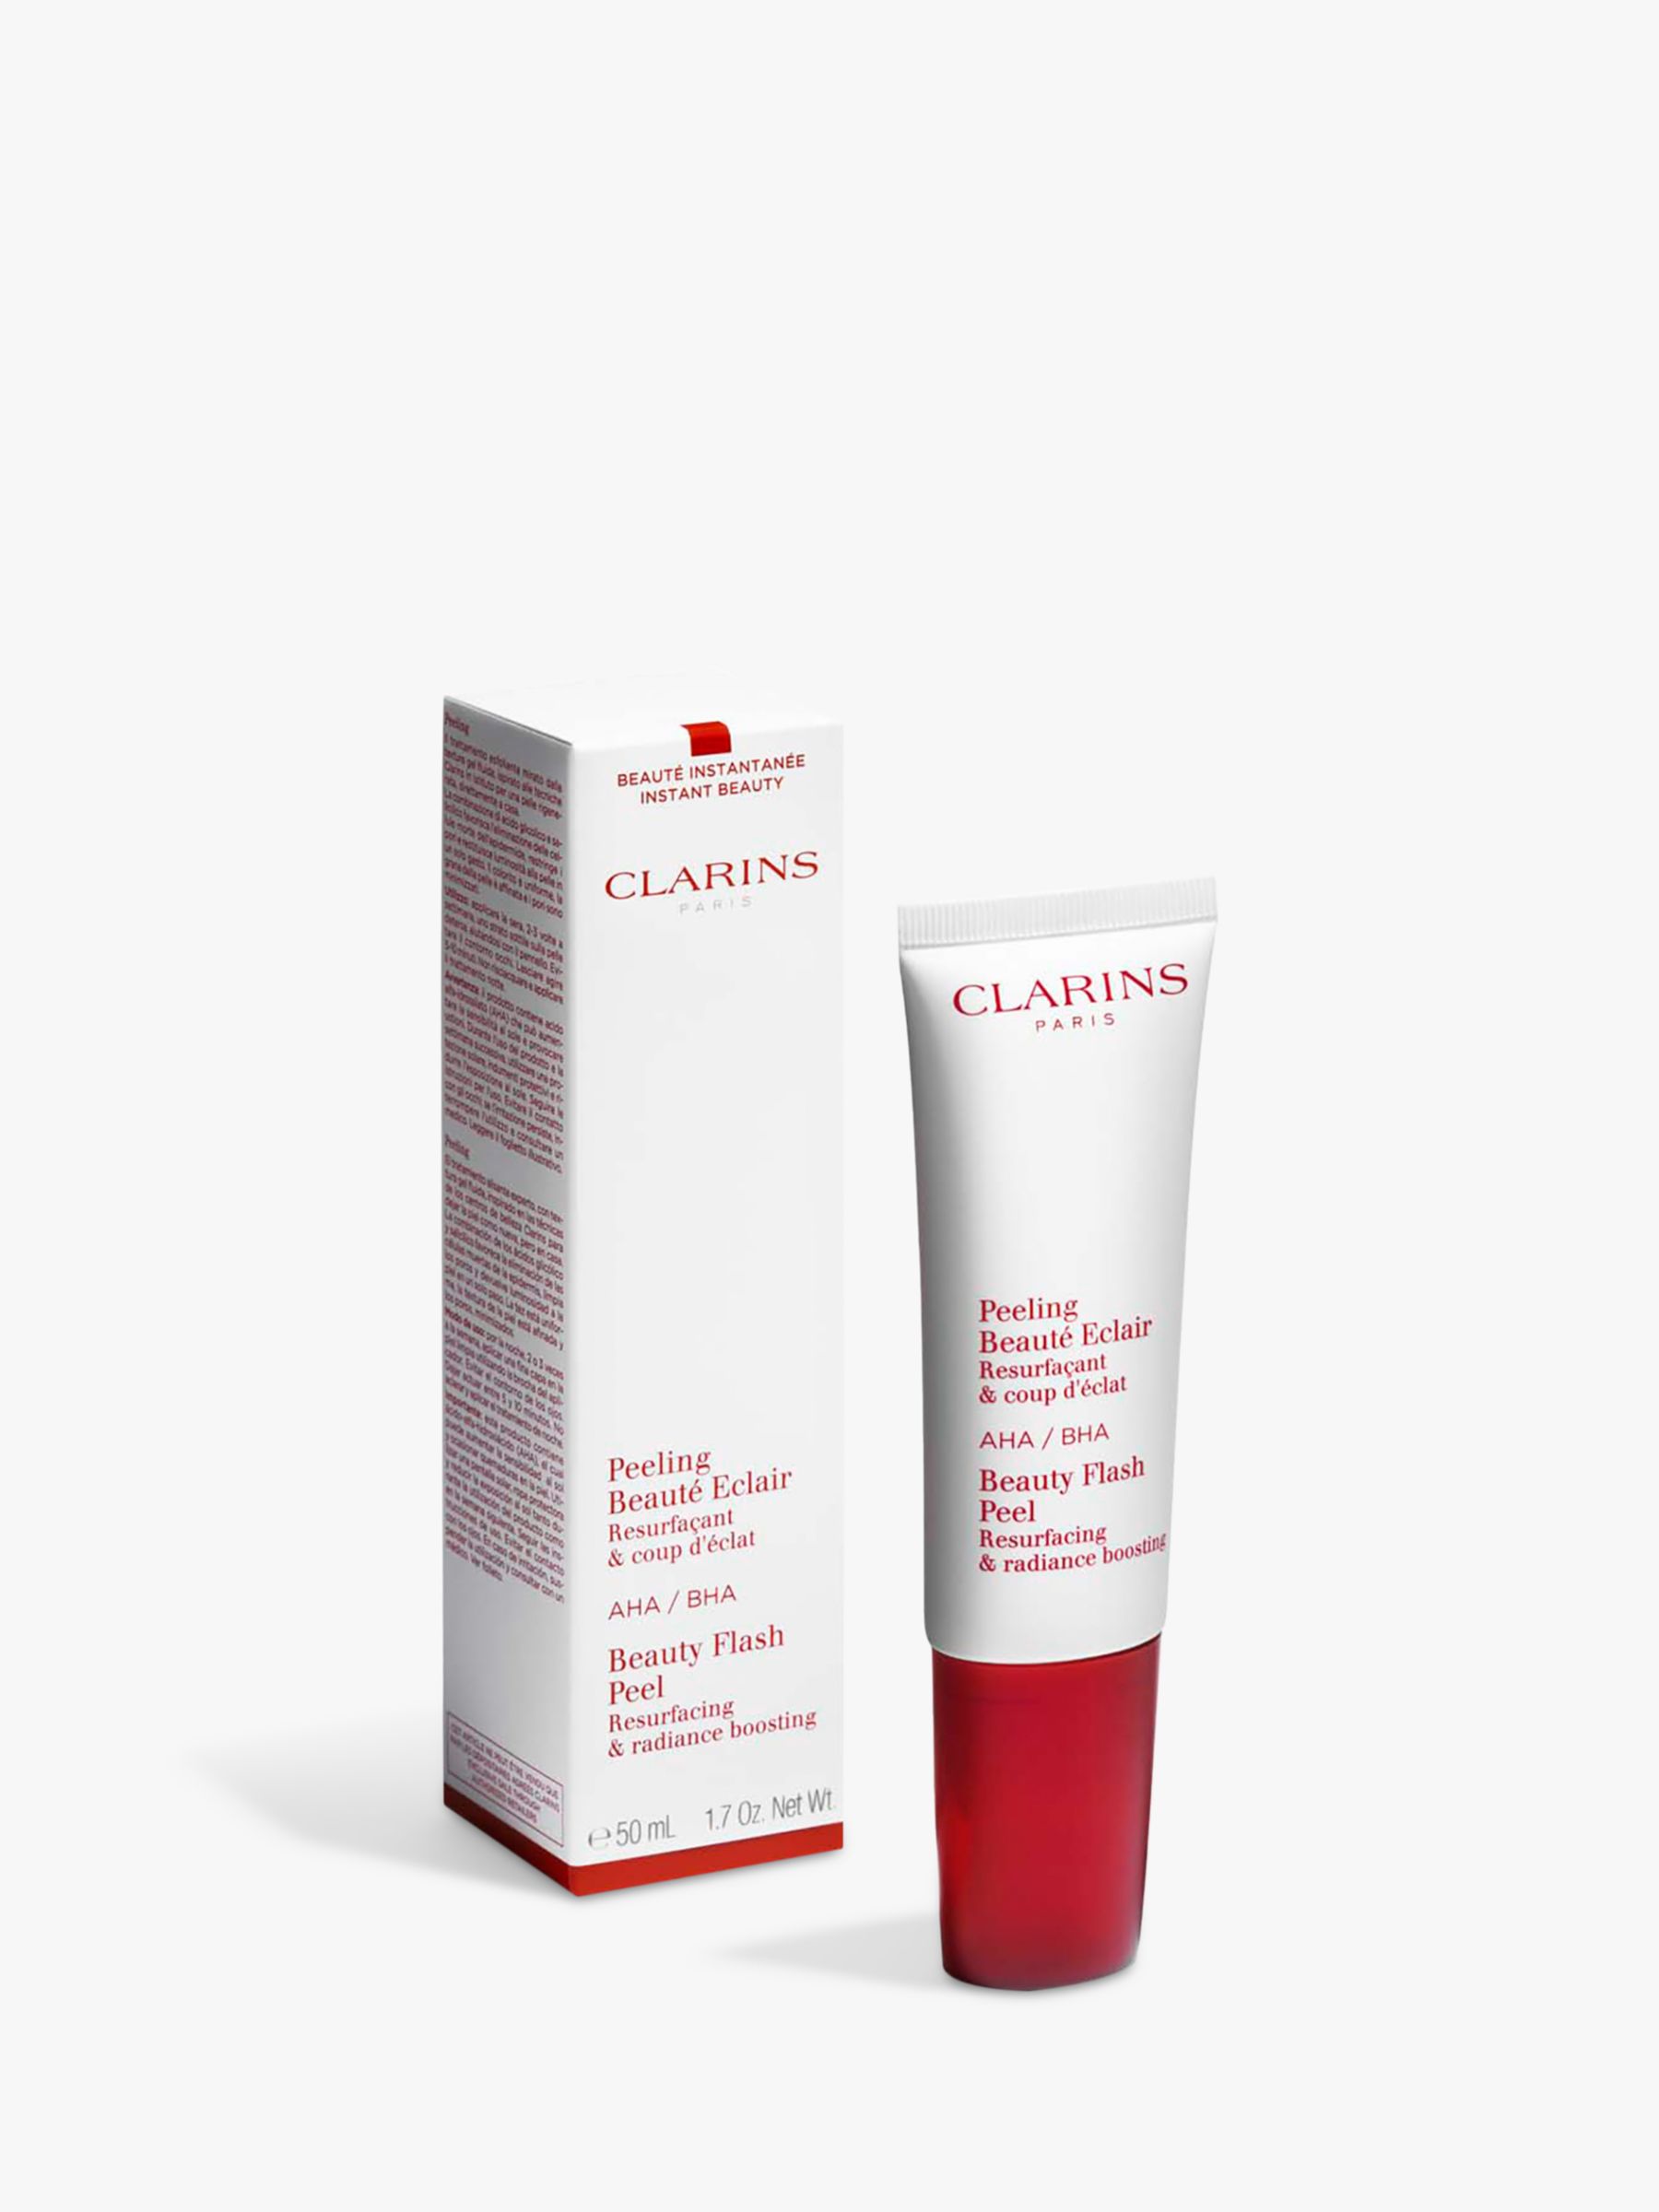 Clarins Beauty Flash Peel, 50ml 5